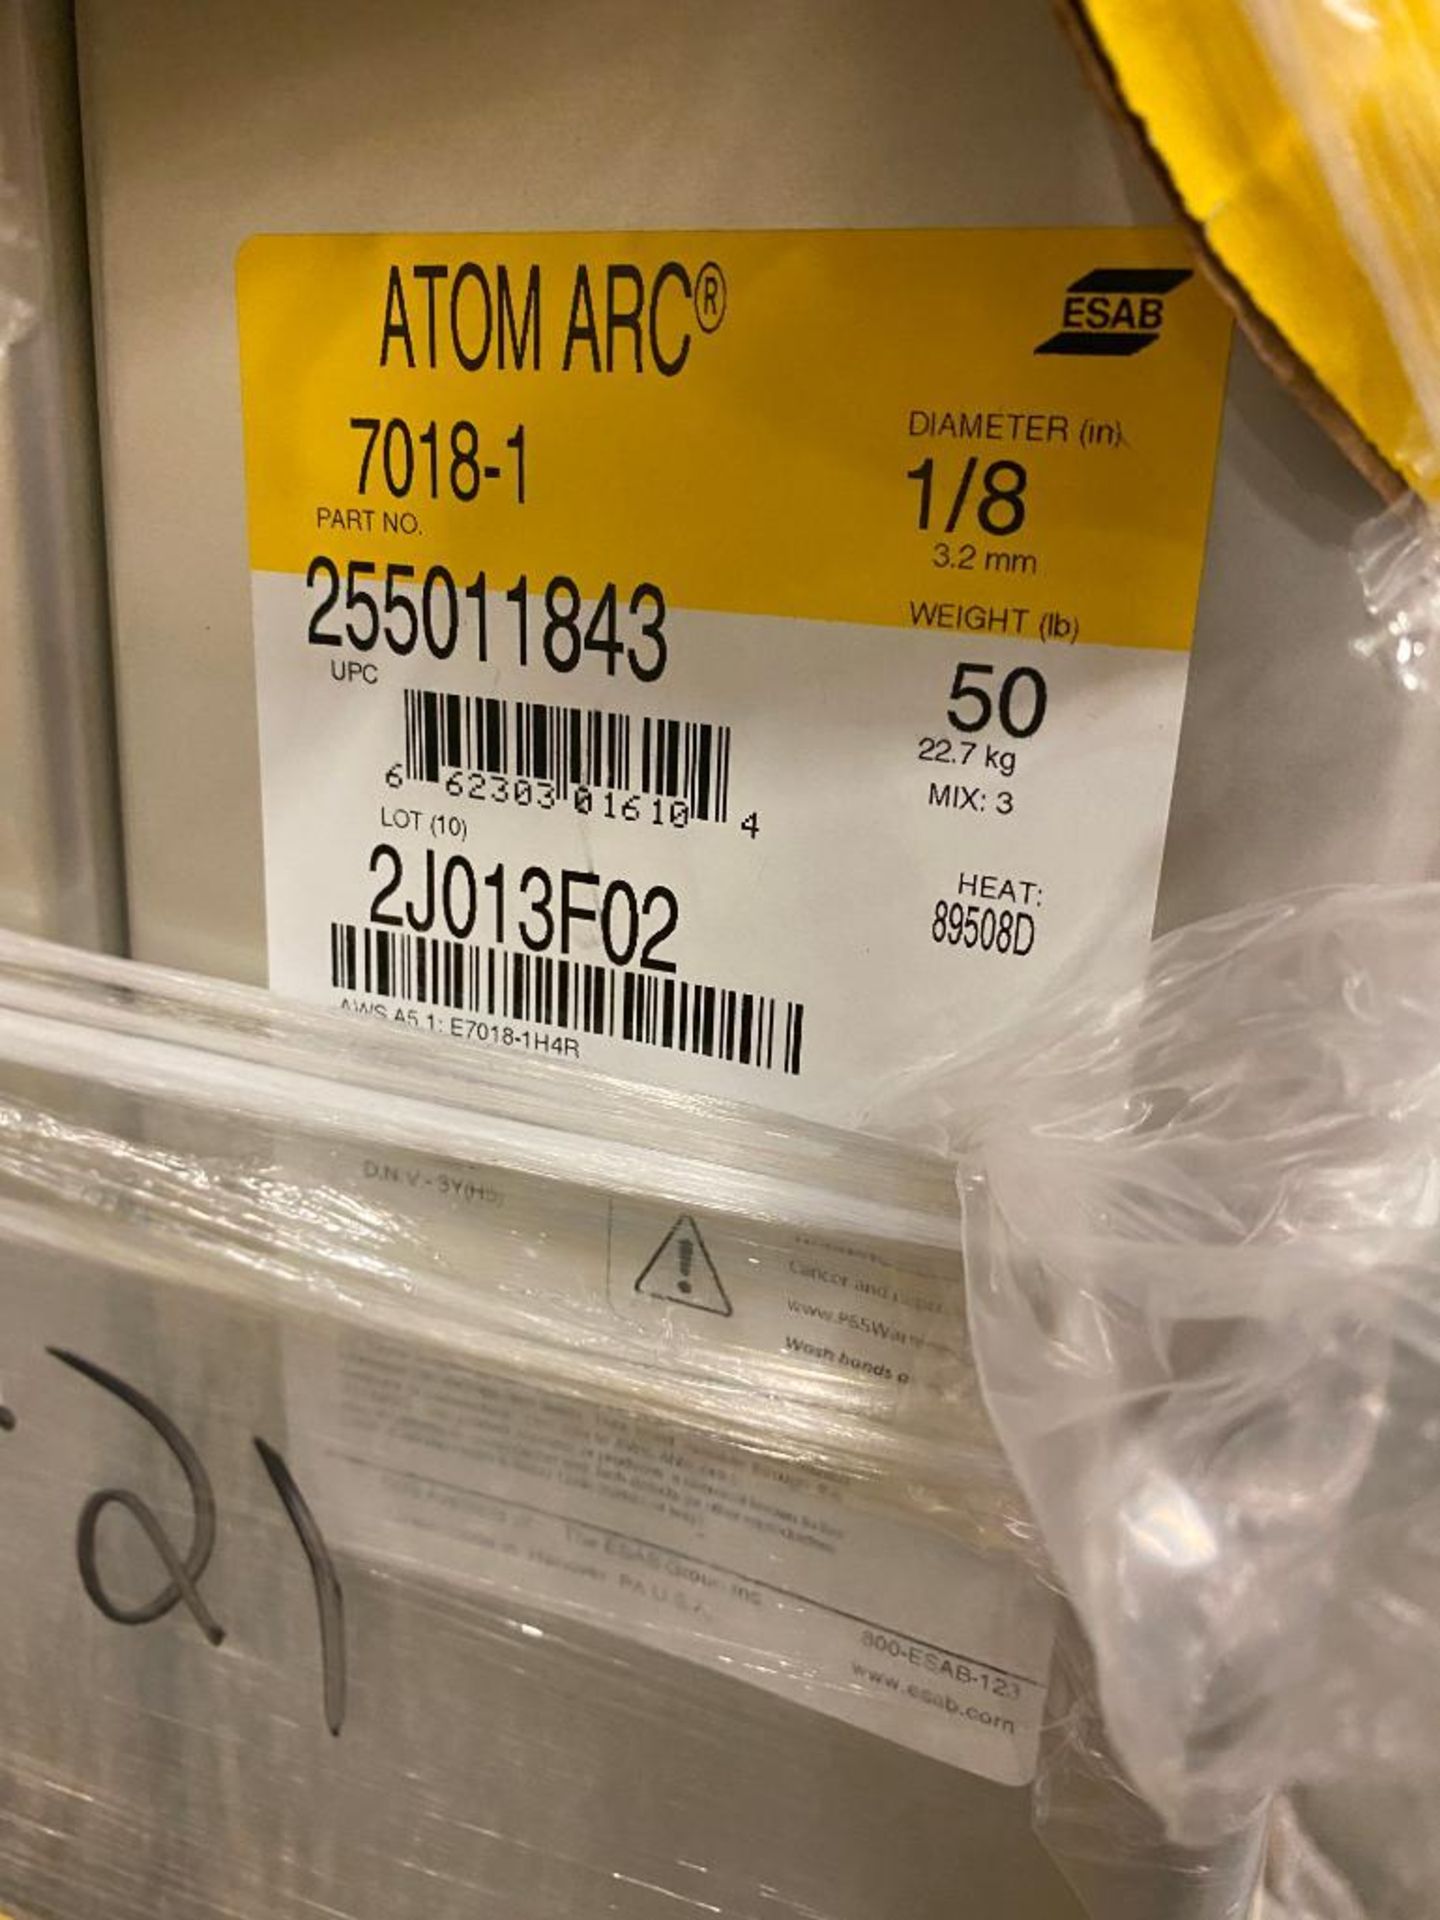 Skid of Esab Atom ARC 7018-1 1/8" Electrodes - Image 3 of 3